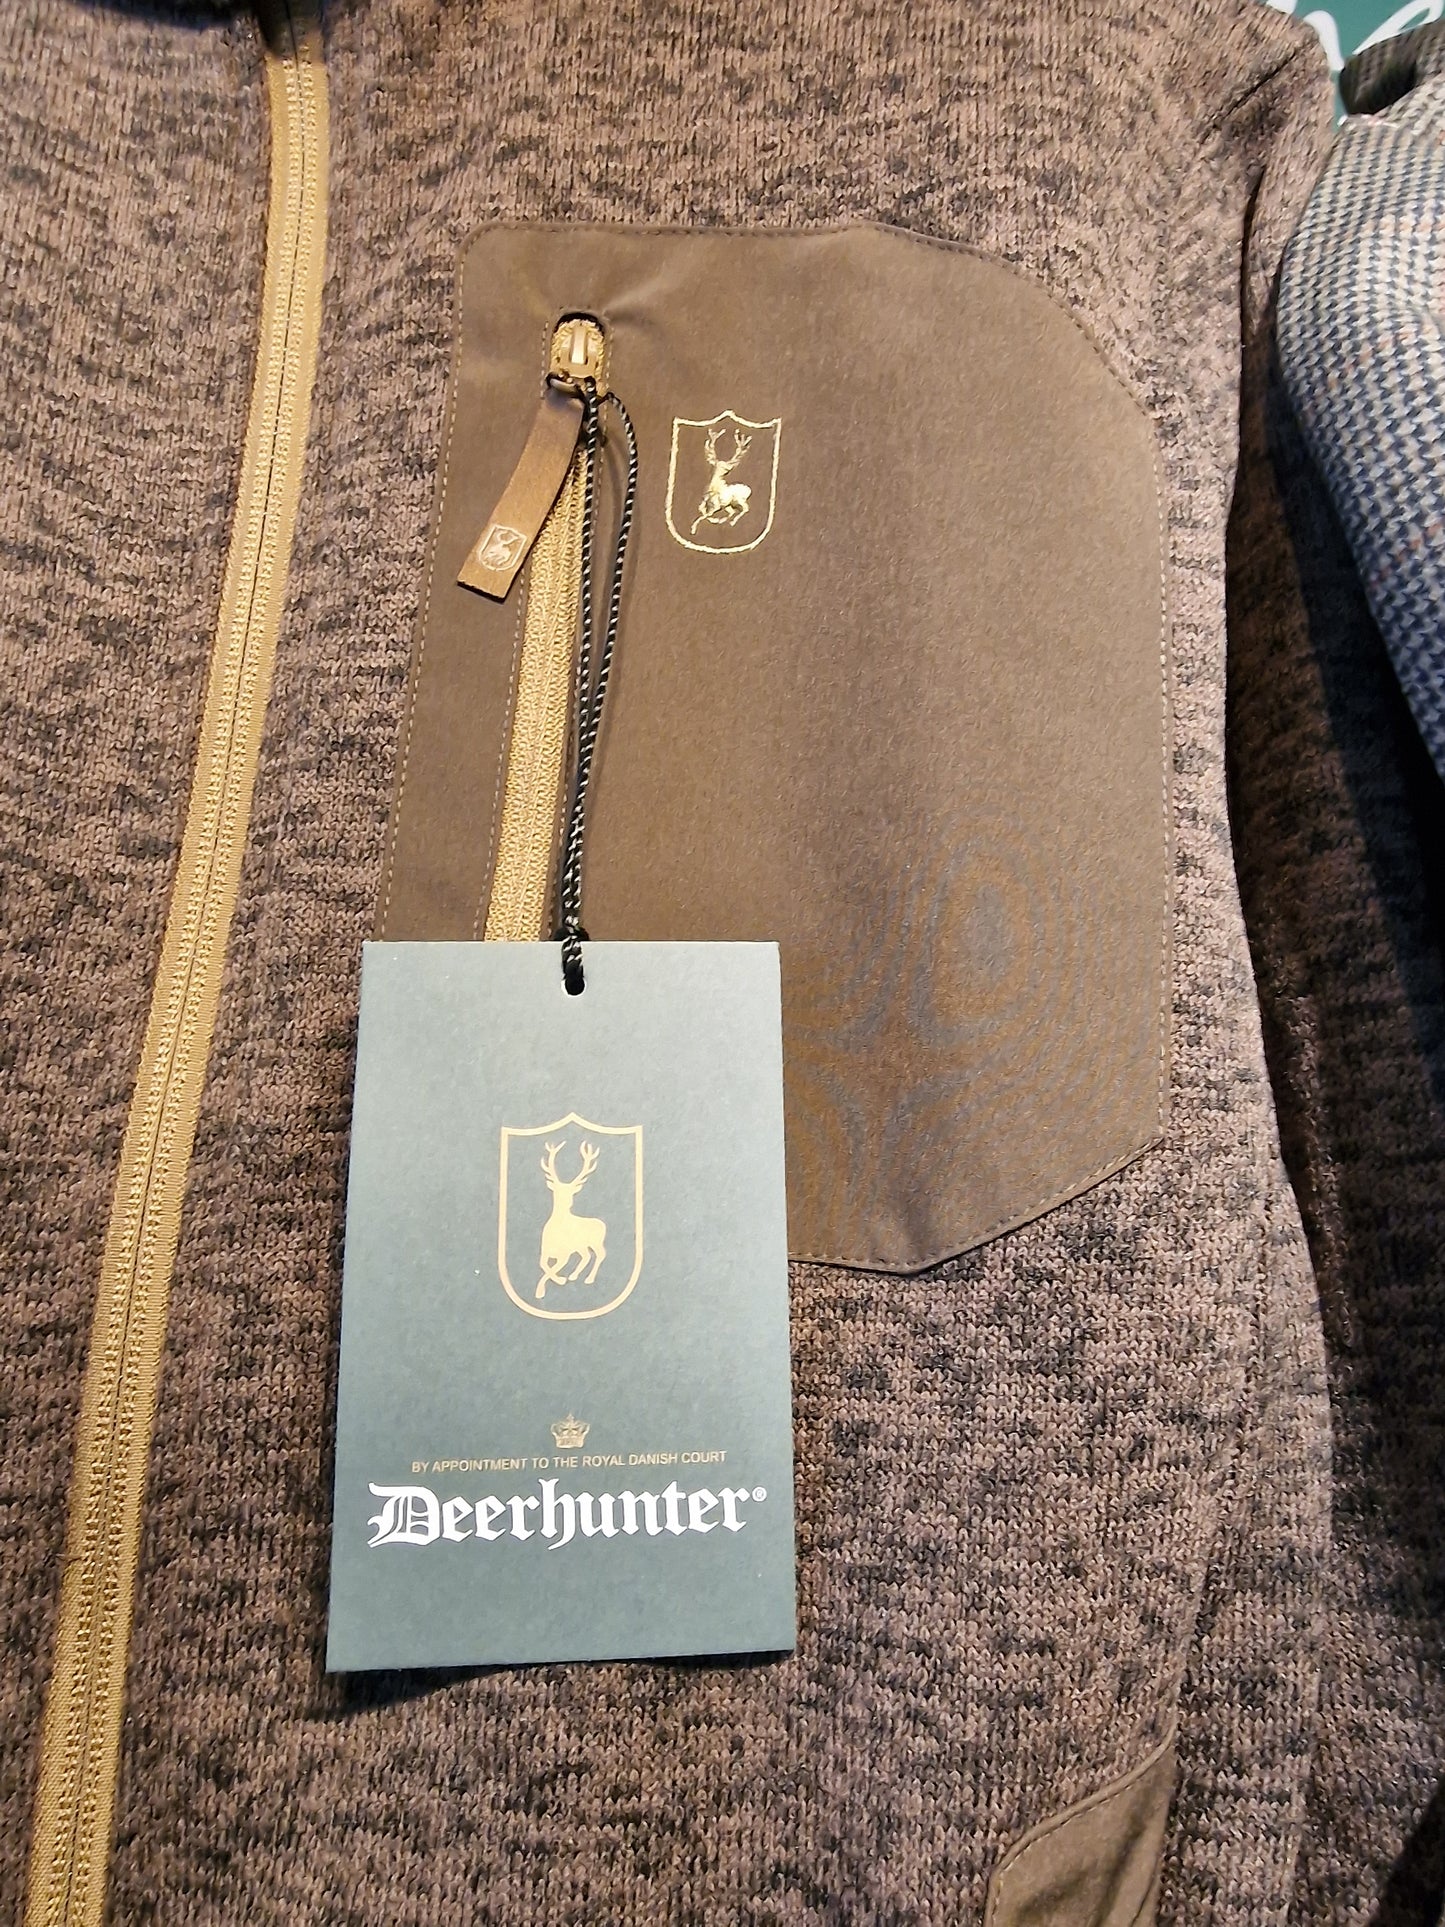 Deerhunter Sarek Knitted Jacket